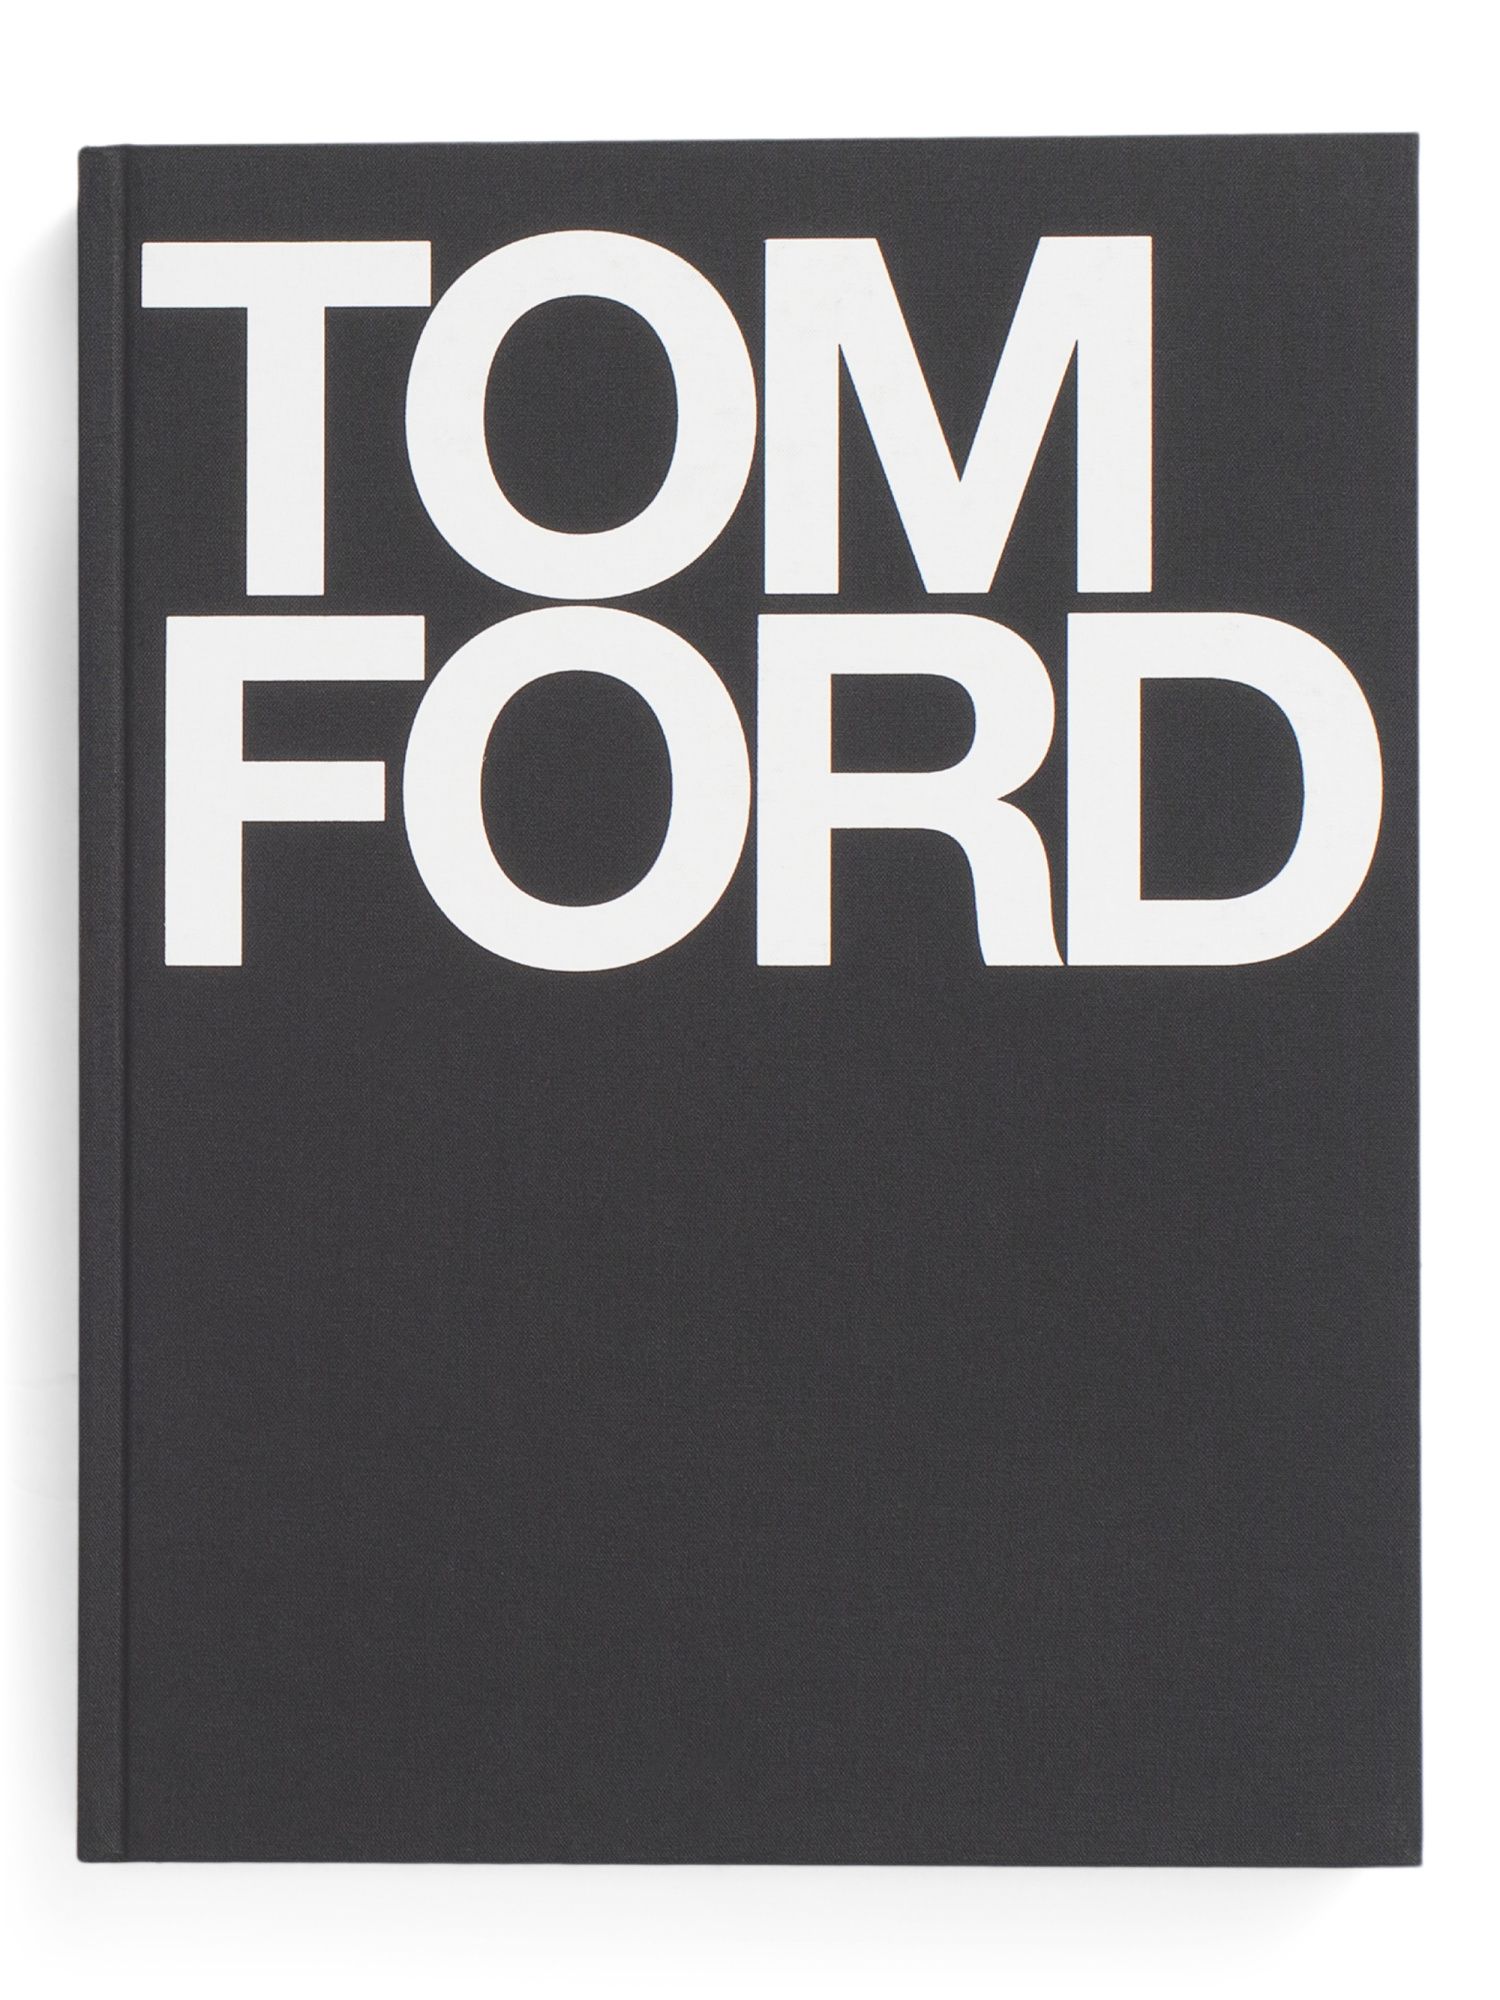 Tom Ford Book | TJ Maxx